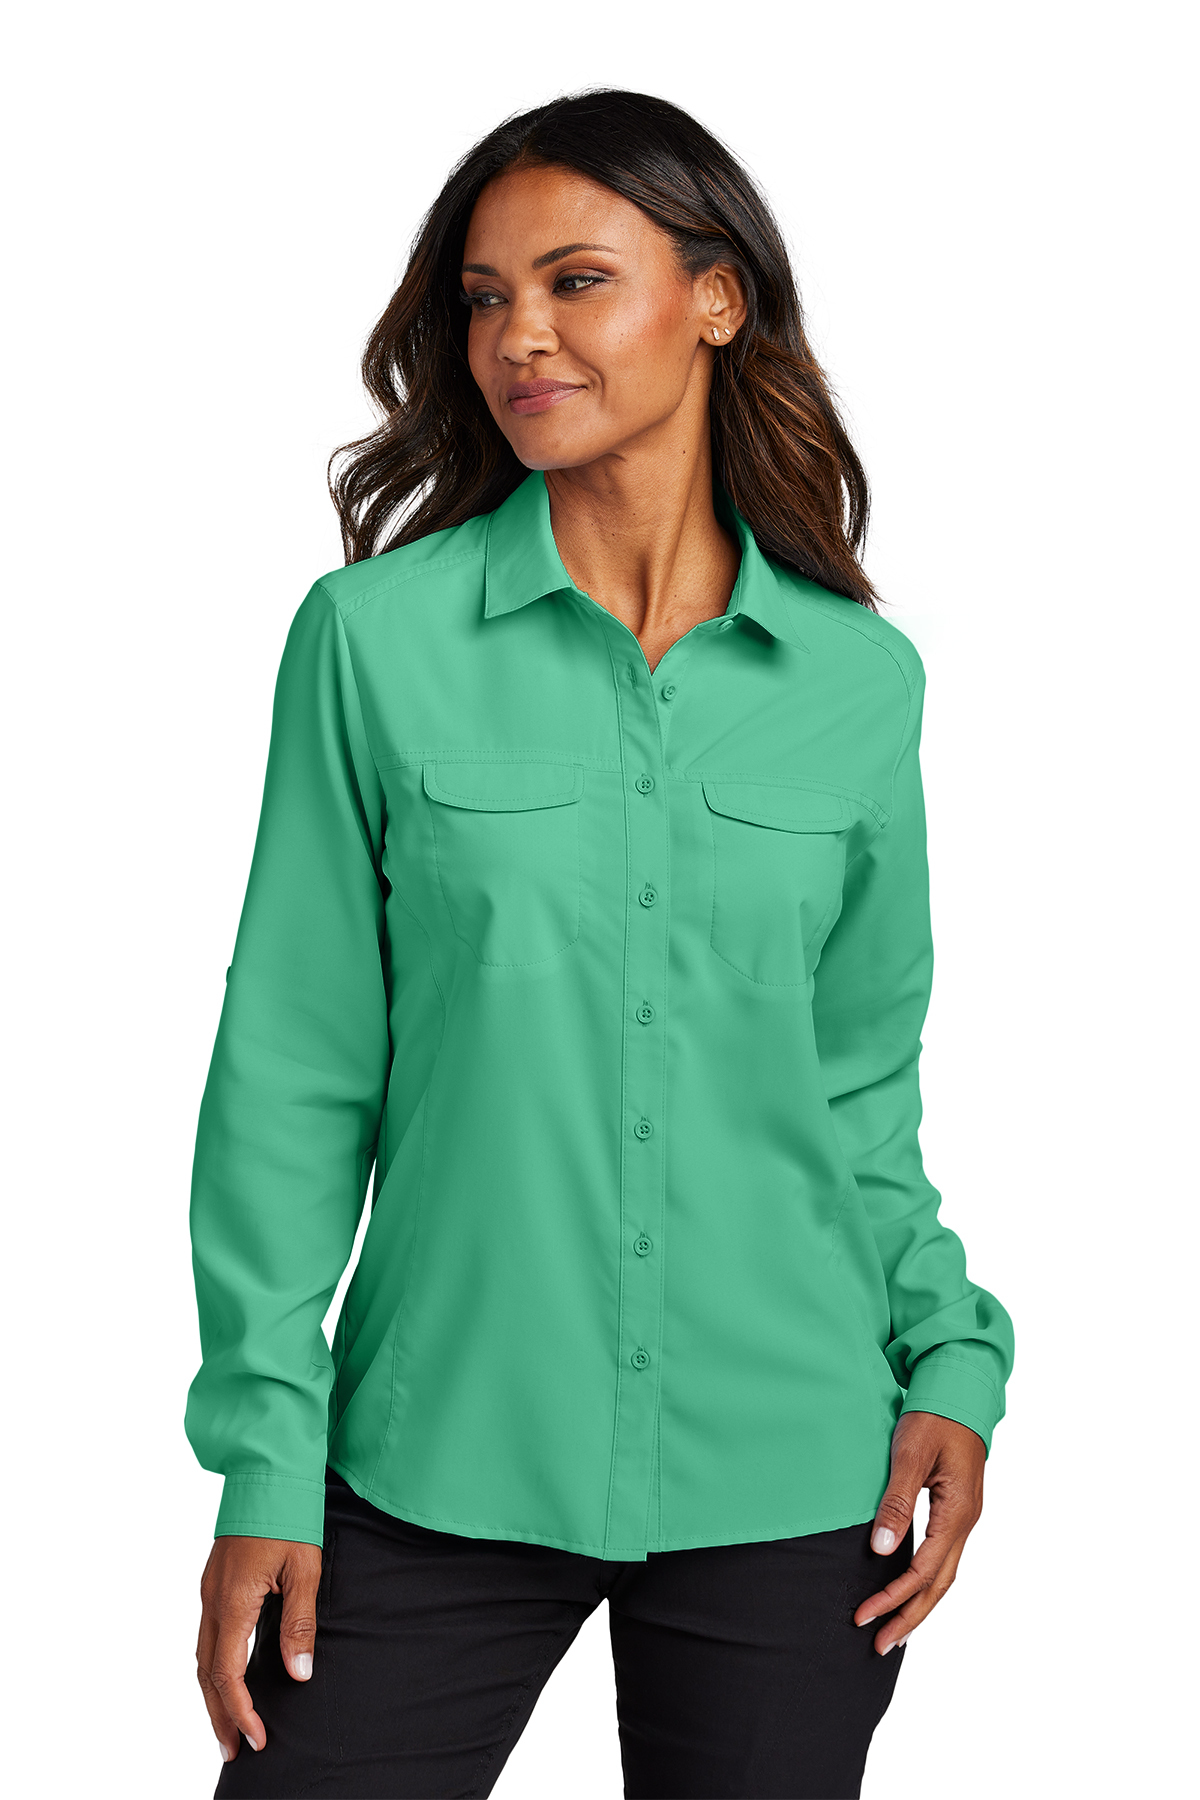 Port Authority Ladies Long Sleeve UV Daybreak Shirt | Product | Port ...